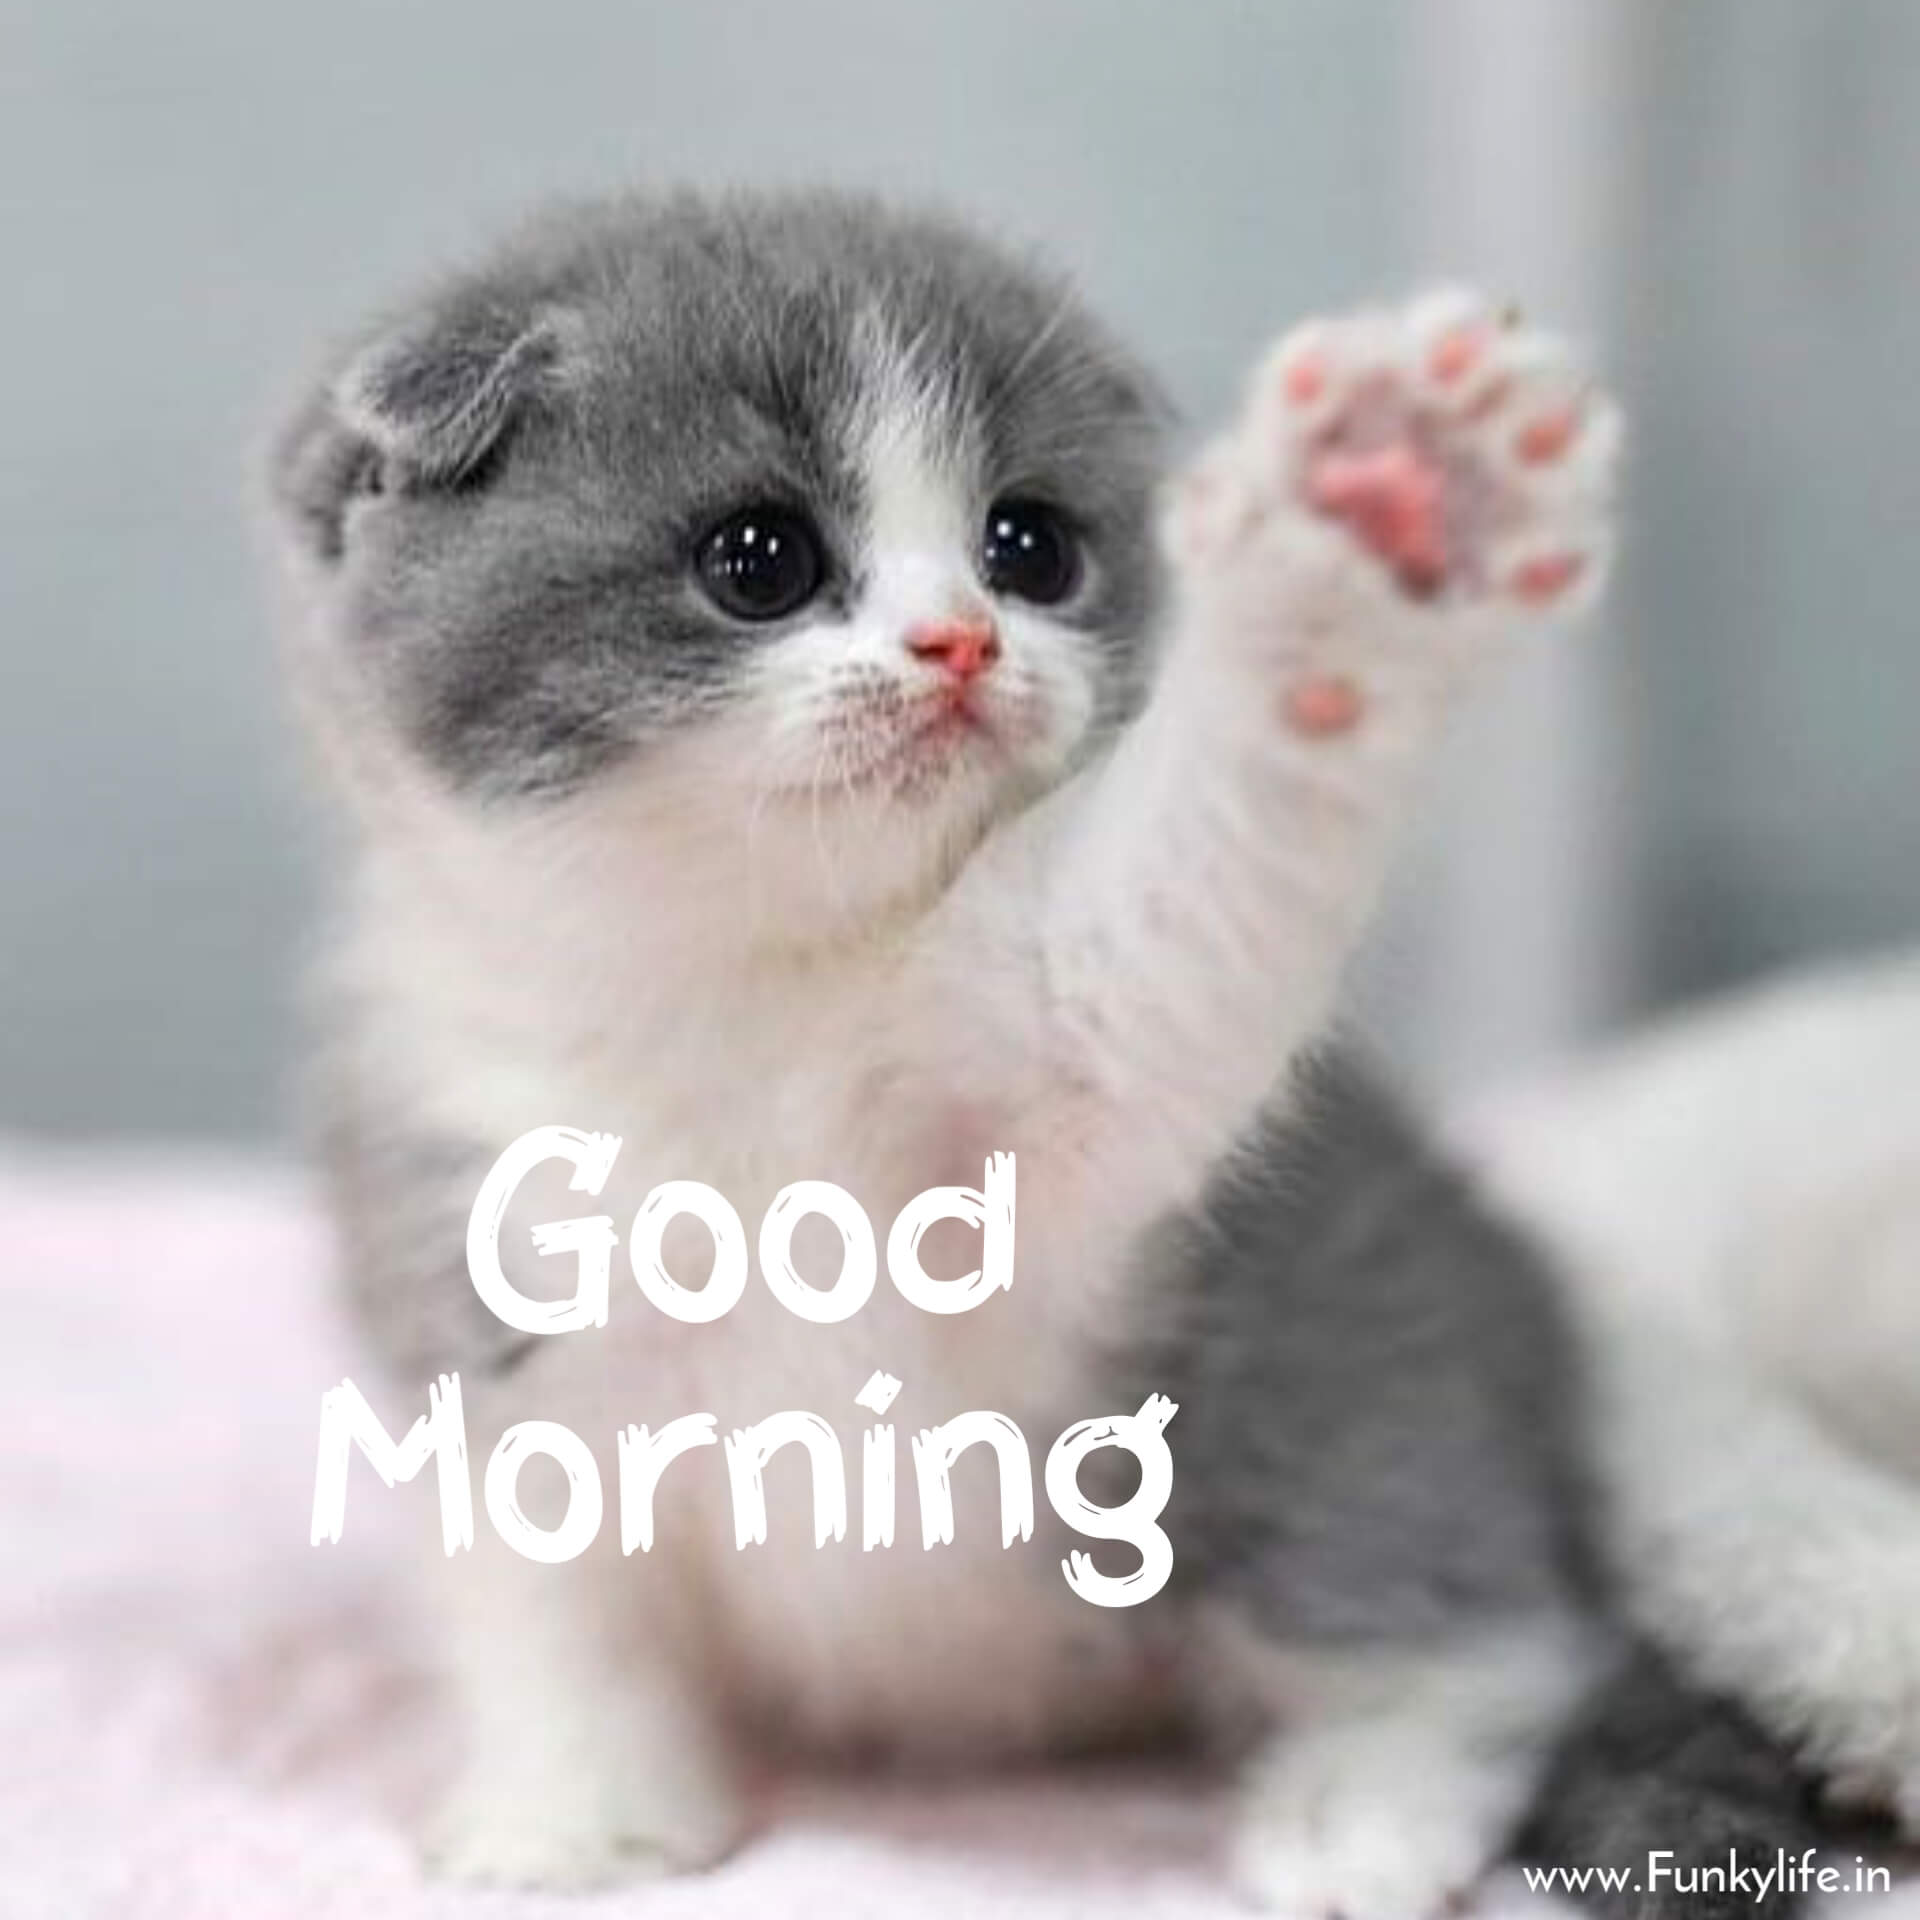 Cute cat saying good morning